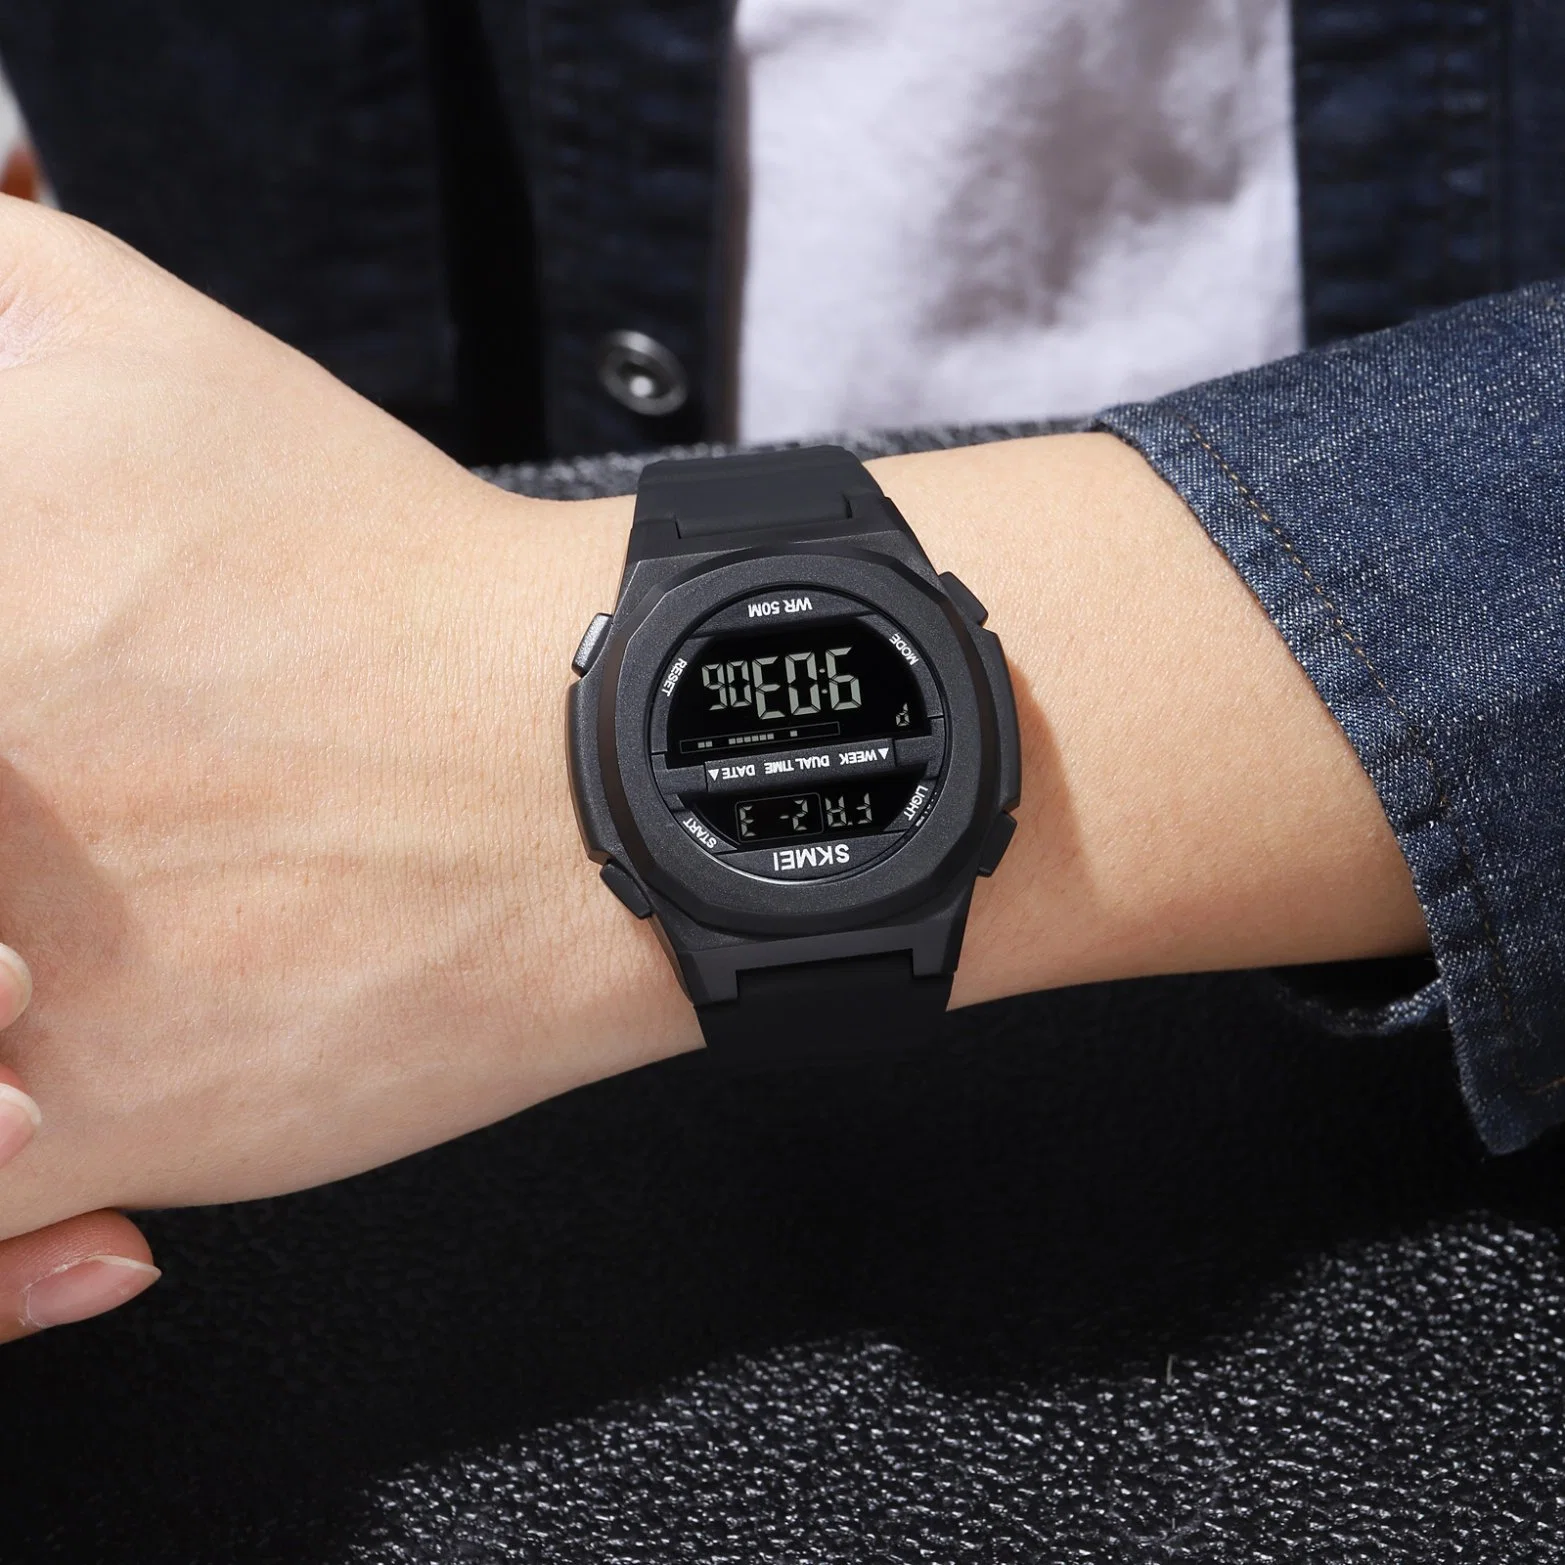 Wrist Watch for Fashion Watch Quartz Watches Men Watch with Gift Watch High quality/High cost performance Watch Digital Watch in Analog-Digital Watch Band Watches